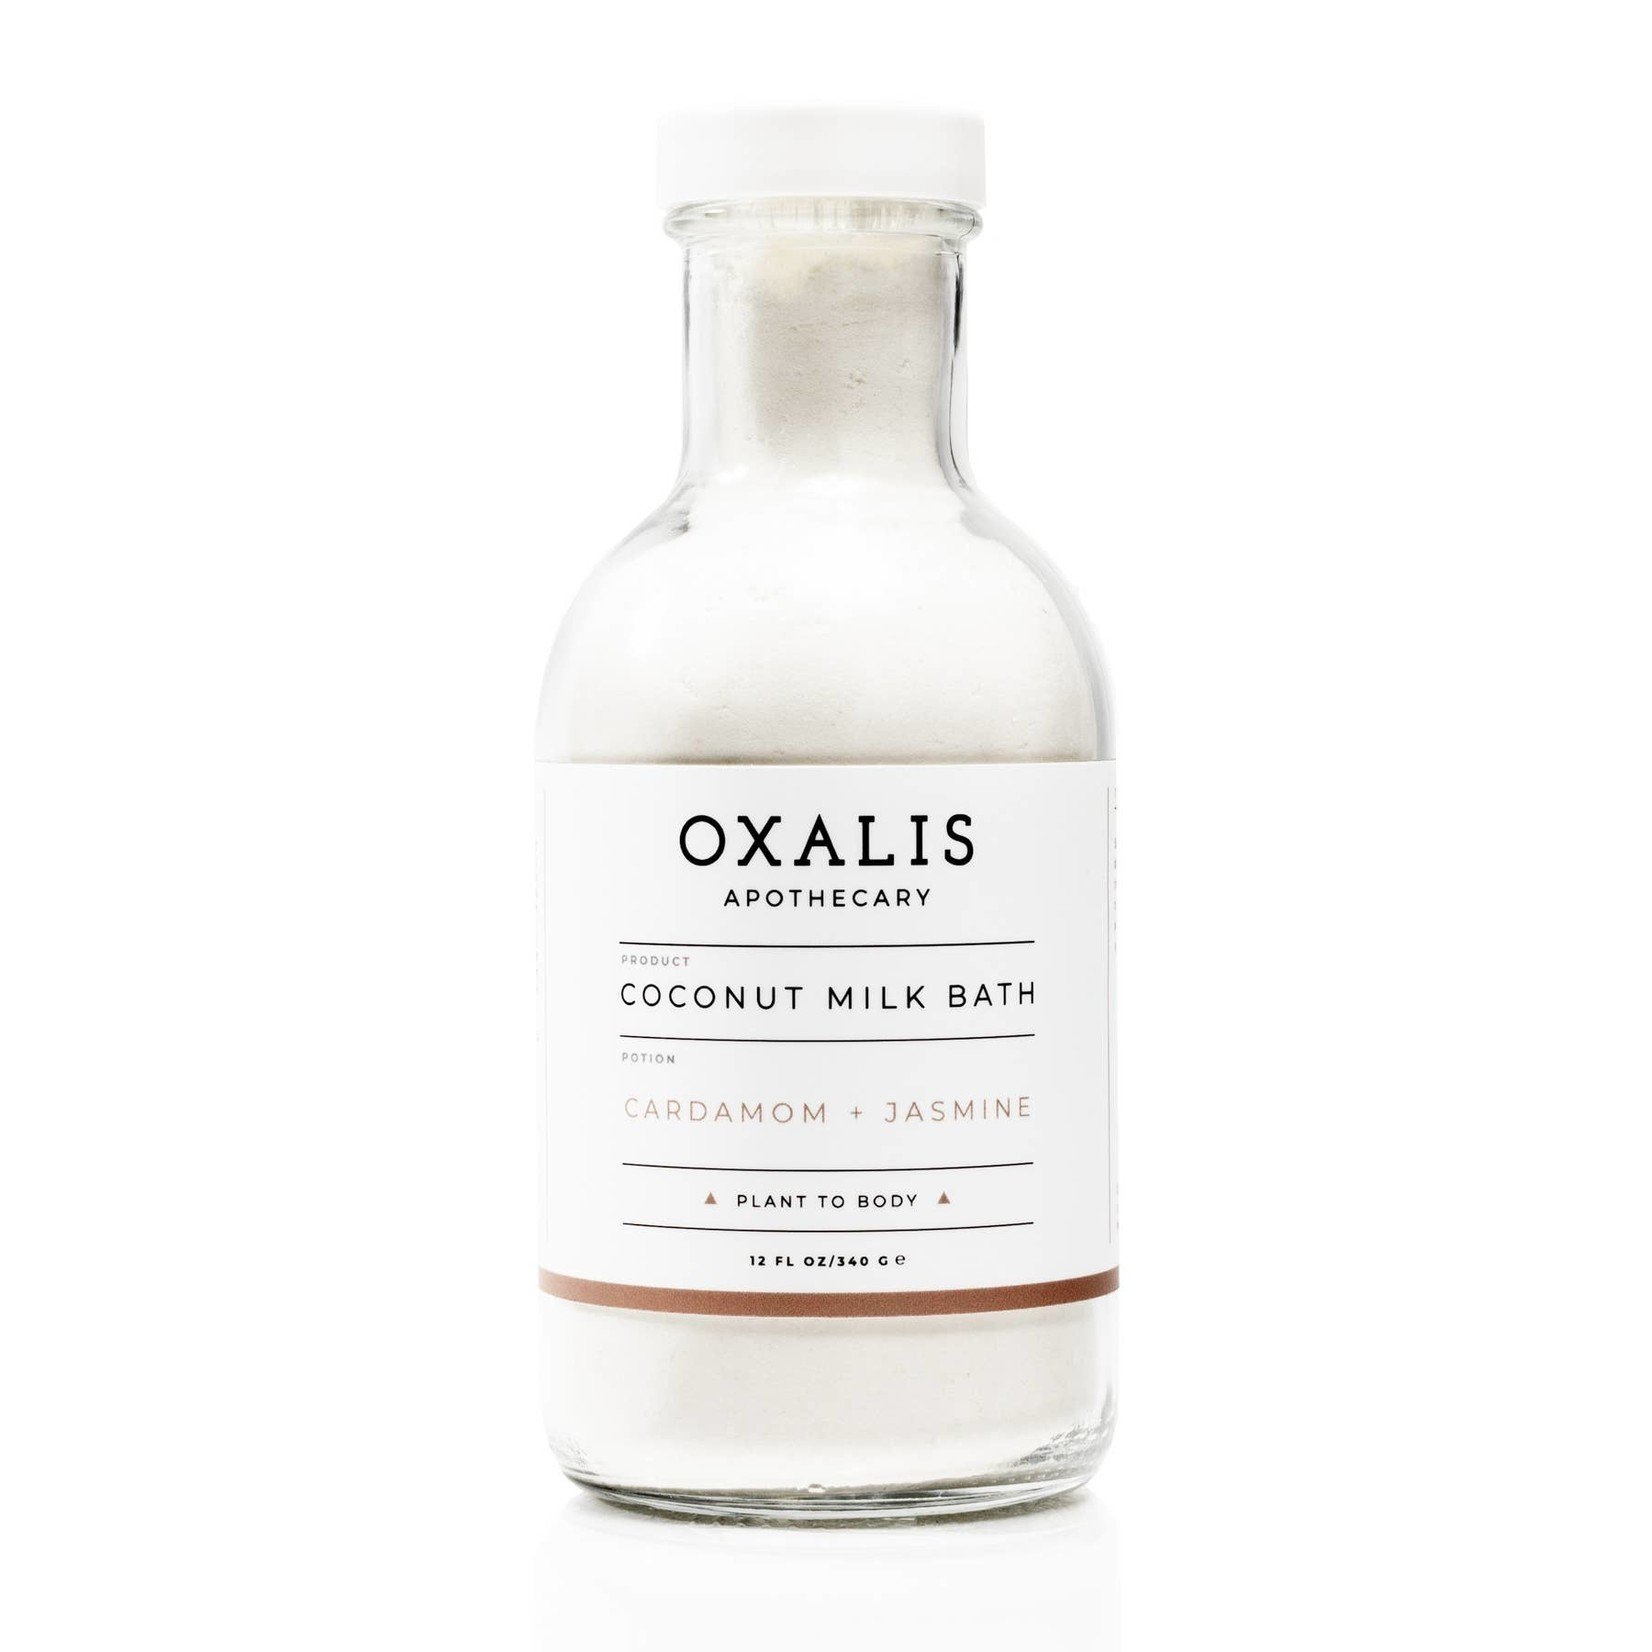 Oxalis Apothecary Coconut Milk Bath | Cardamom + Jasmine